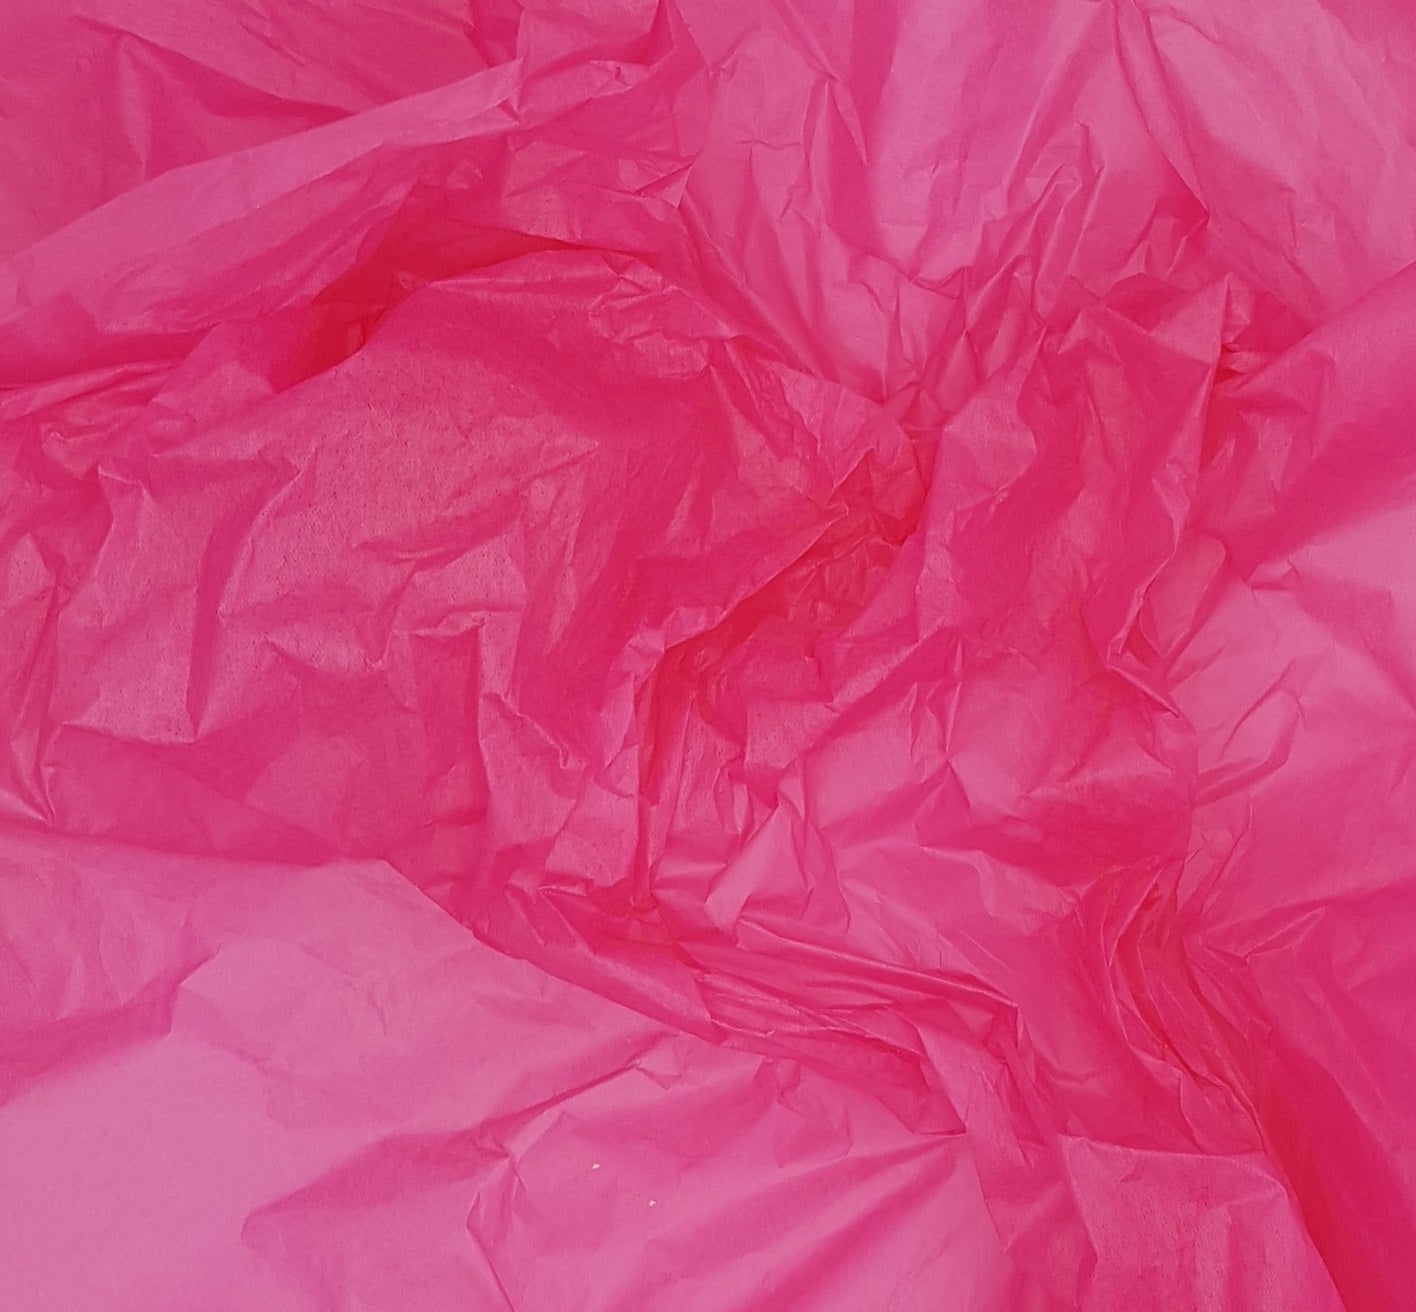 Cerise Pink Tissue Paper